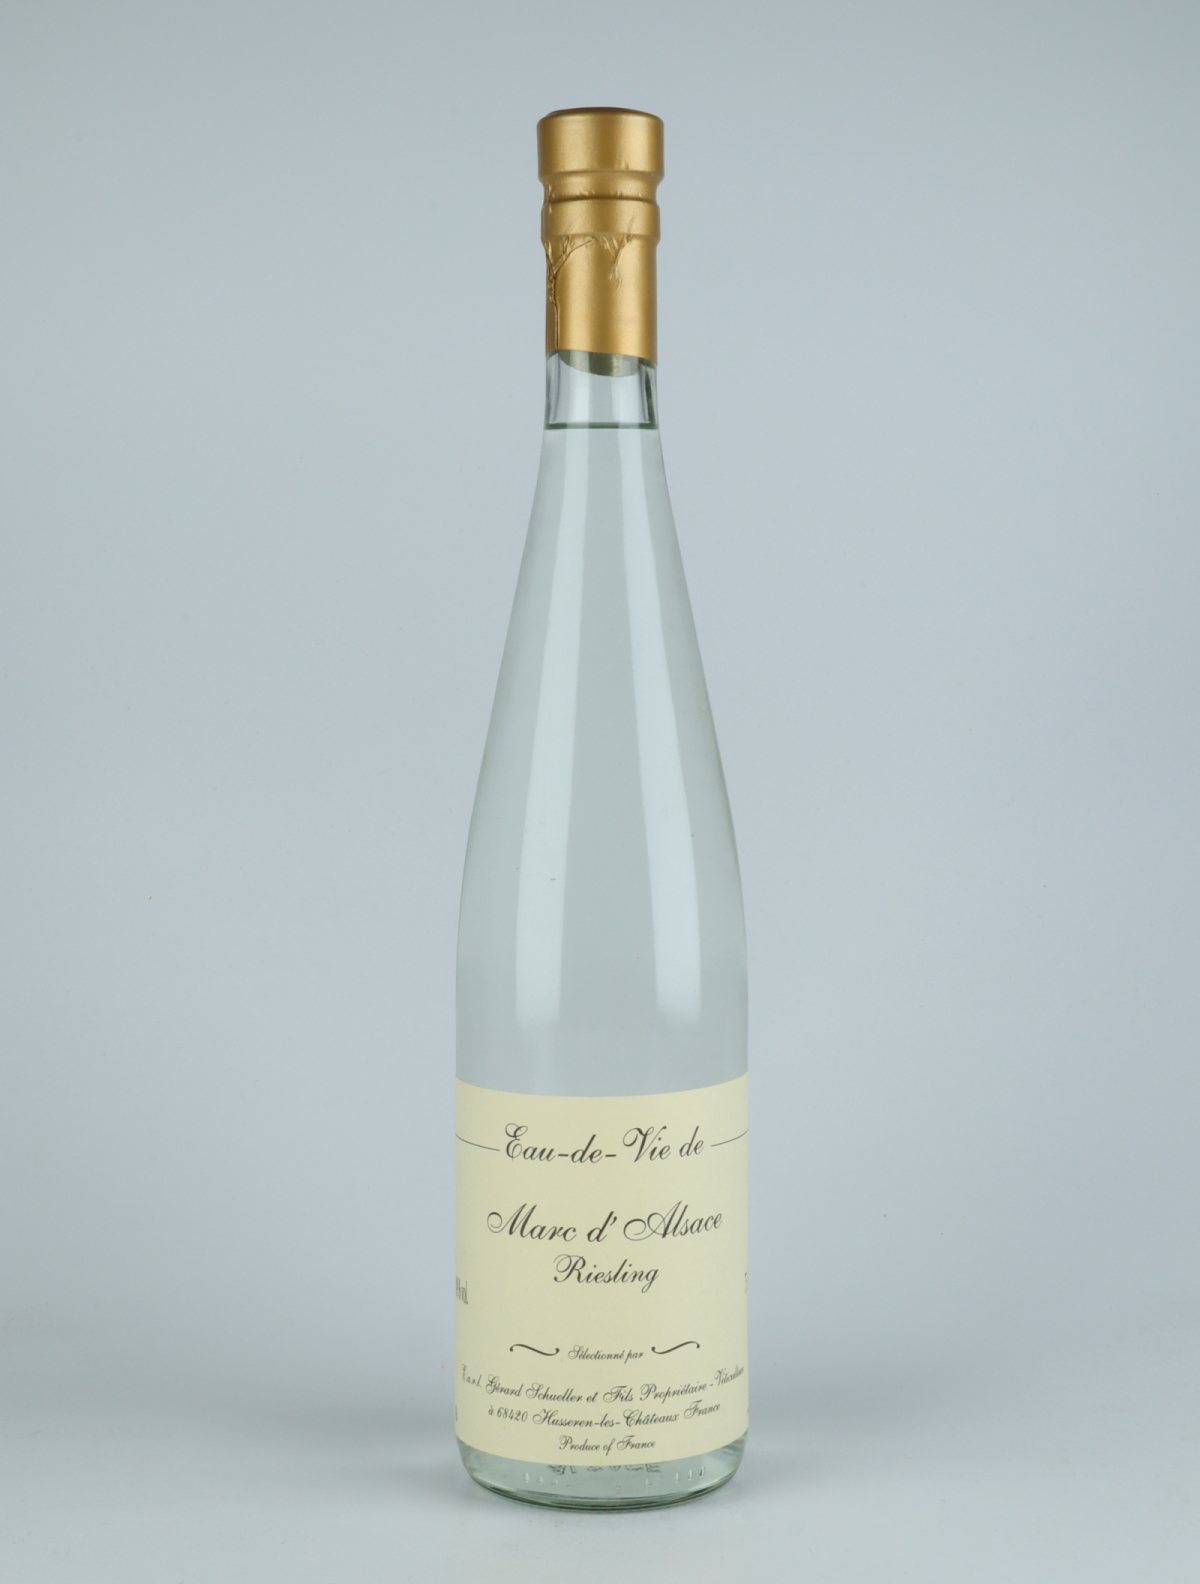 A bottle N.V. Eau de Vie de Marc de Riesling Spirits from Gérard Schueller, Alsace in France